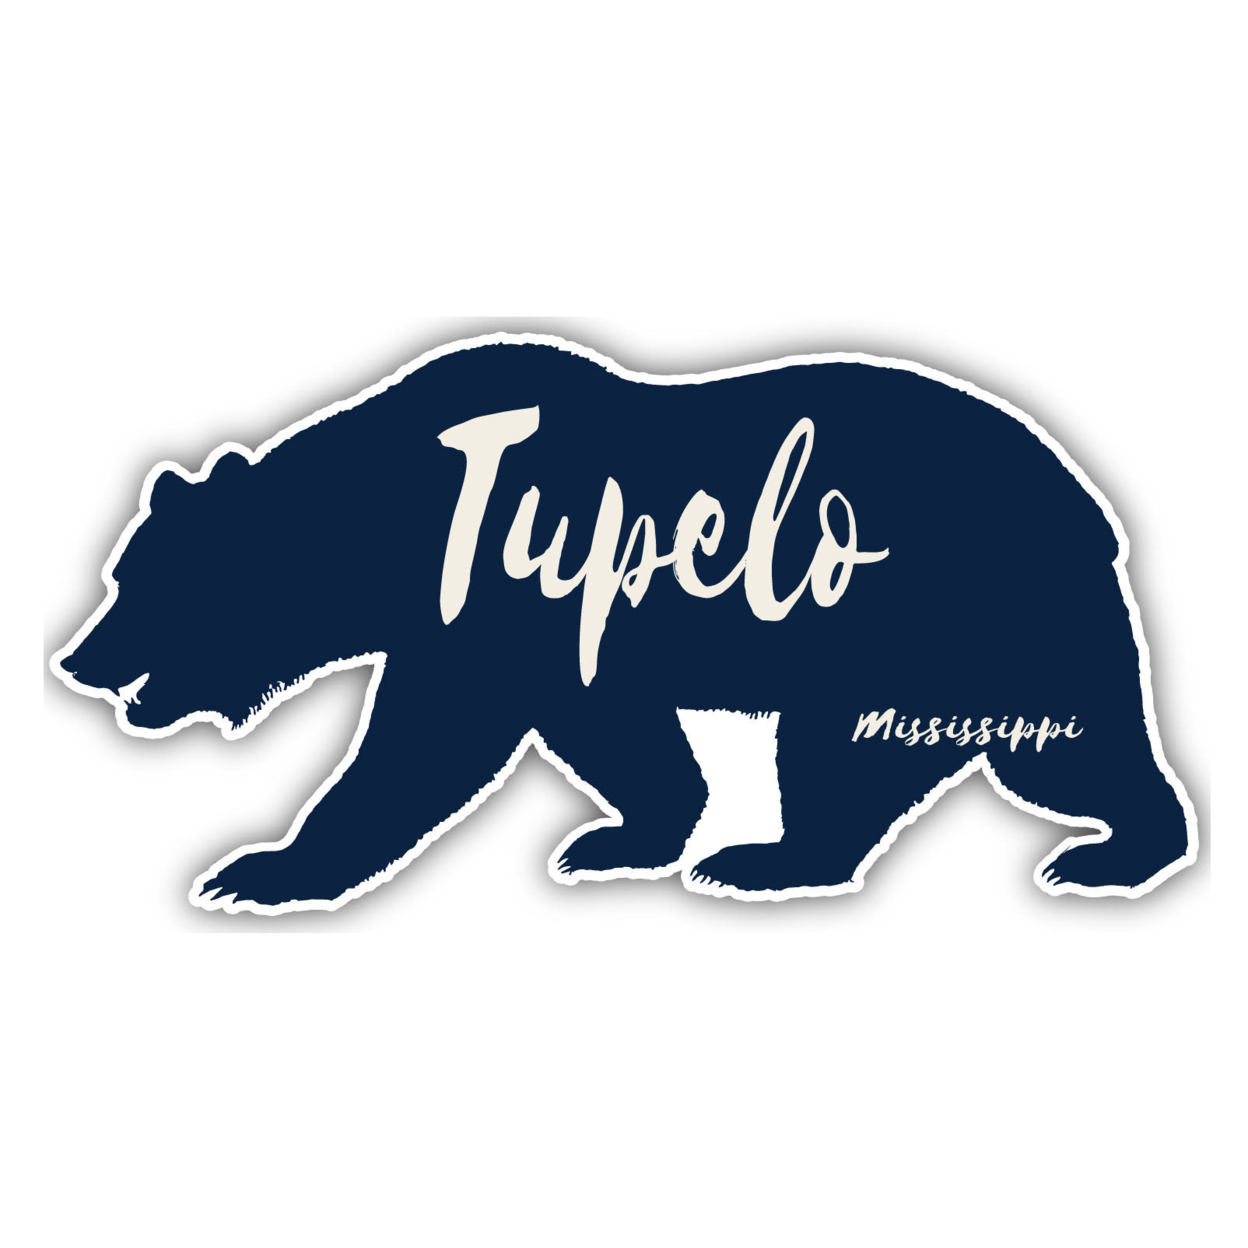 Tupelo Mississippi Souvenir Decorative Stickers (Choose Theme And Size) - Single Unit, 4-Inch, Tent